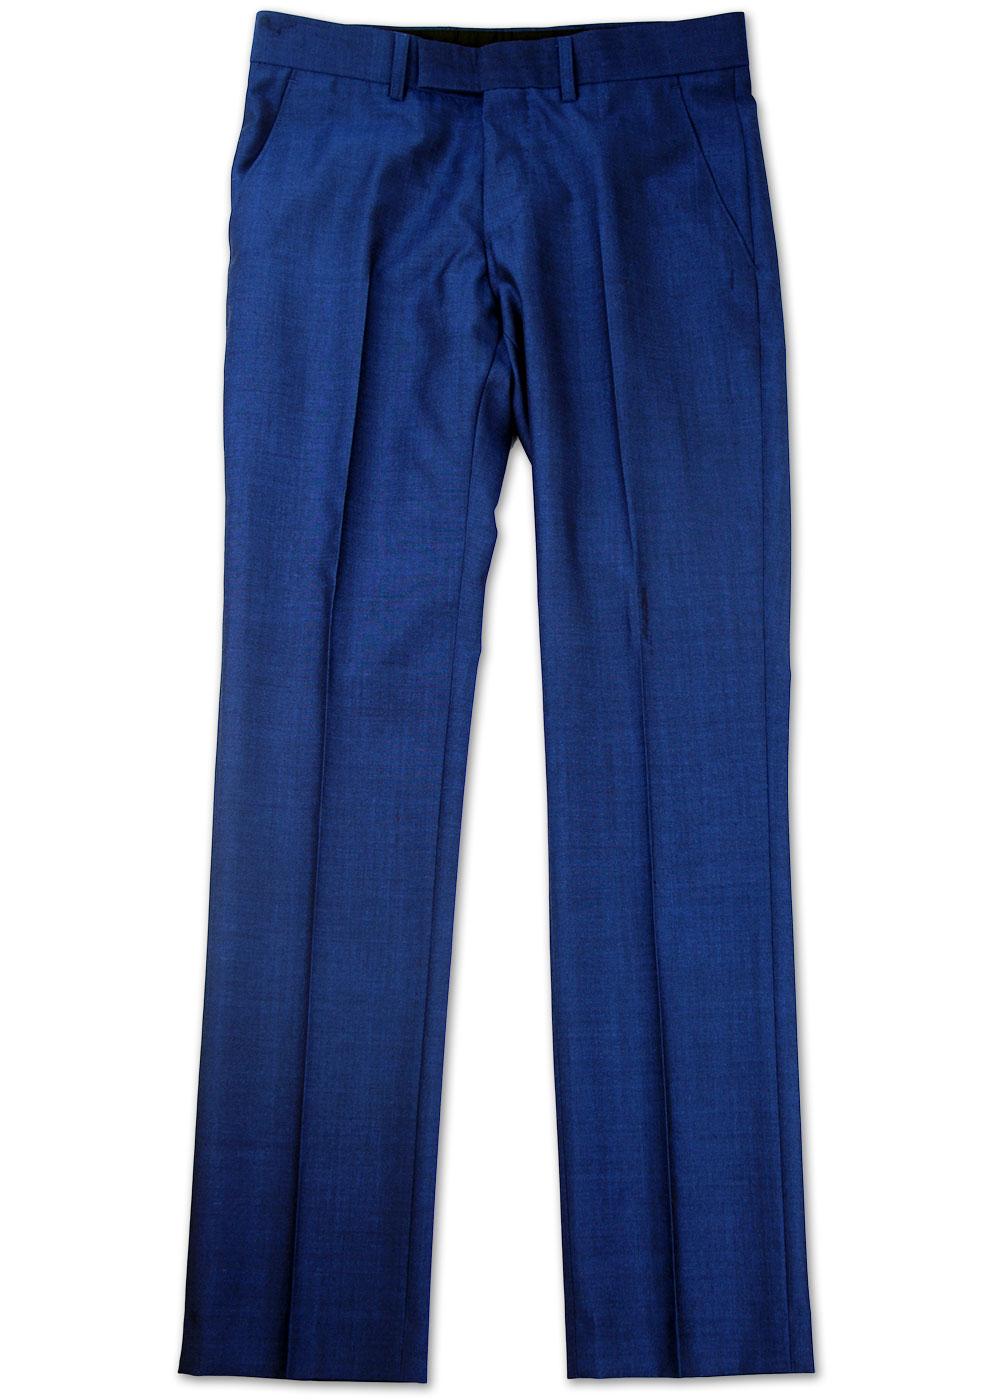 MADCAP ENGLAND Mod Slim Mohair Tonic Suit Trousers Bright Blue